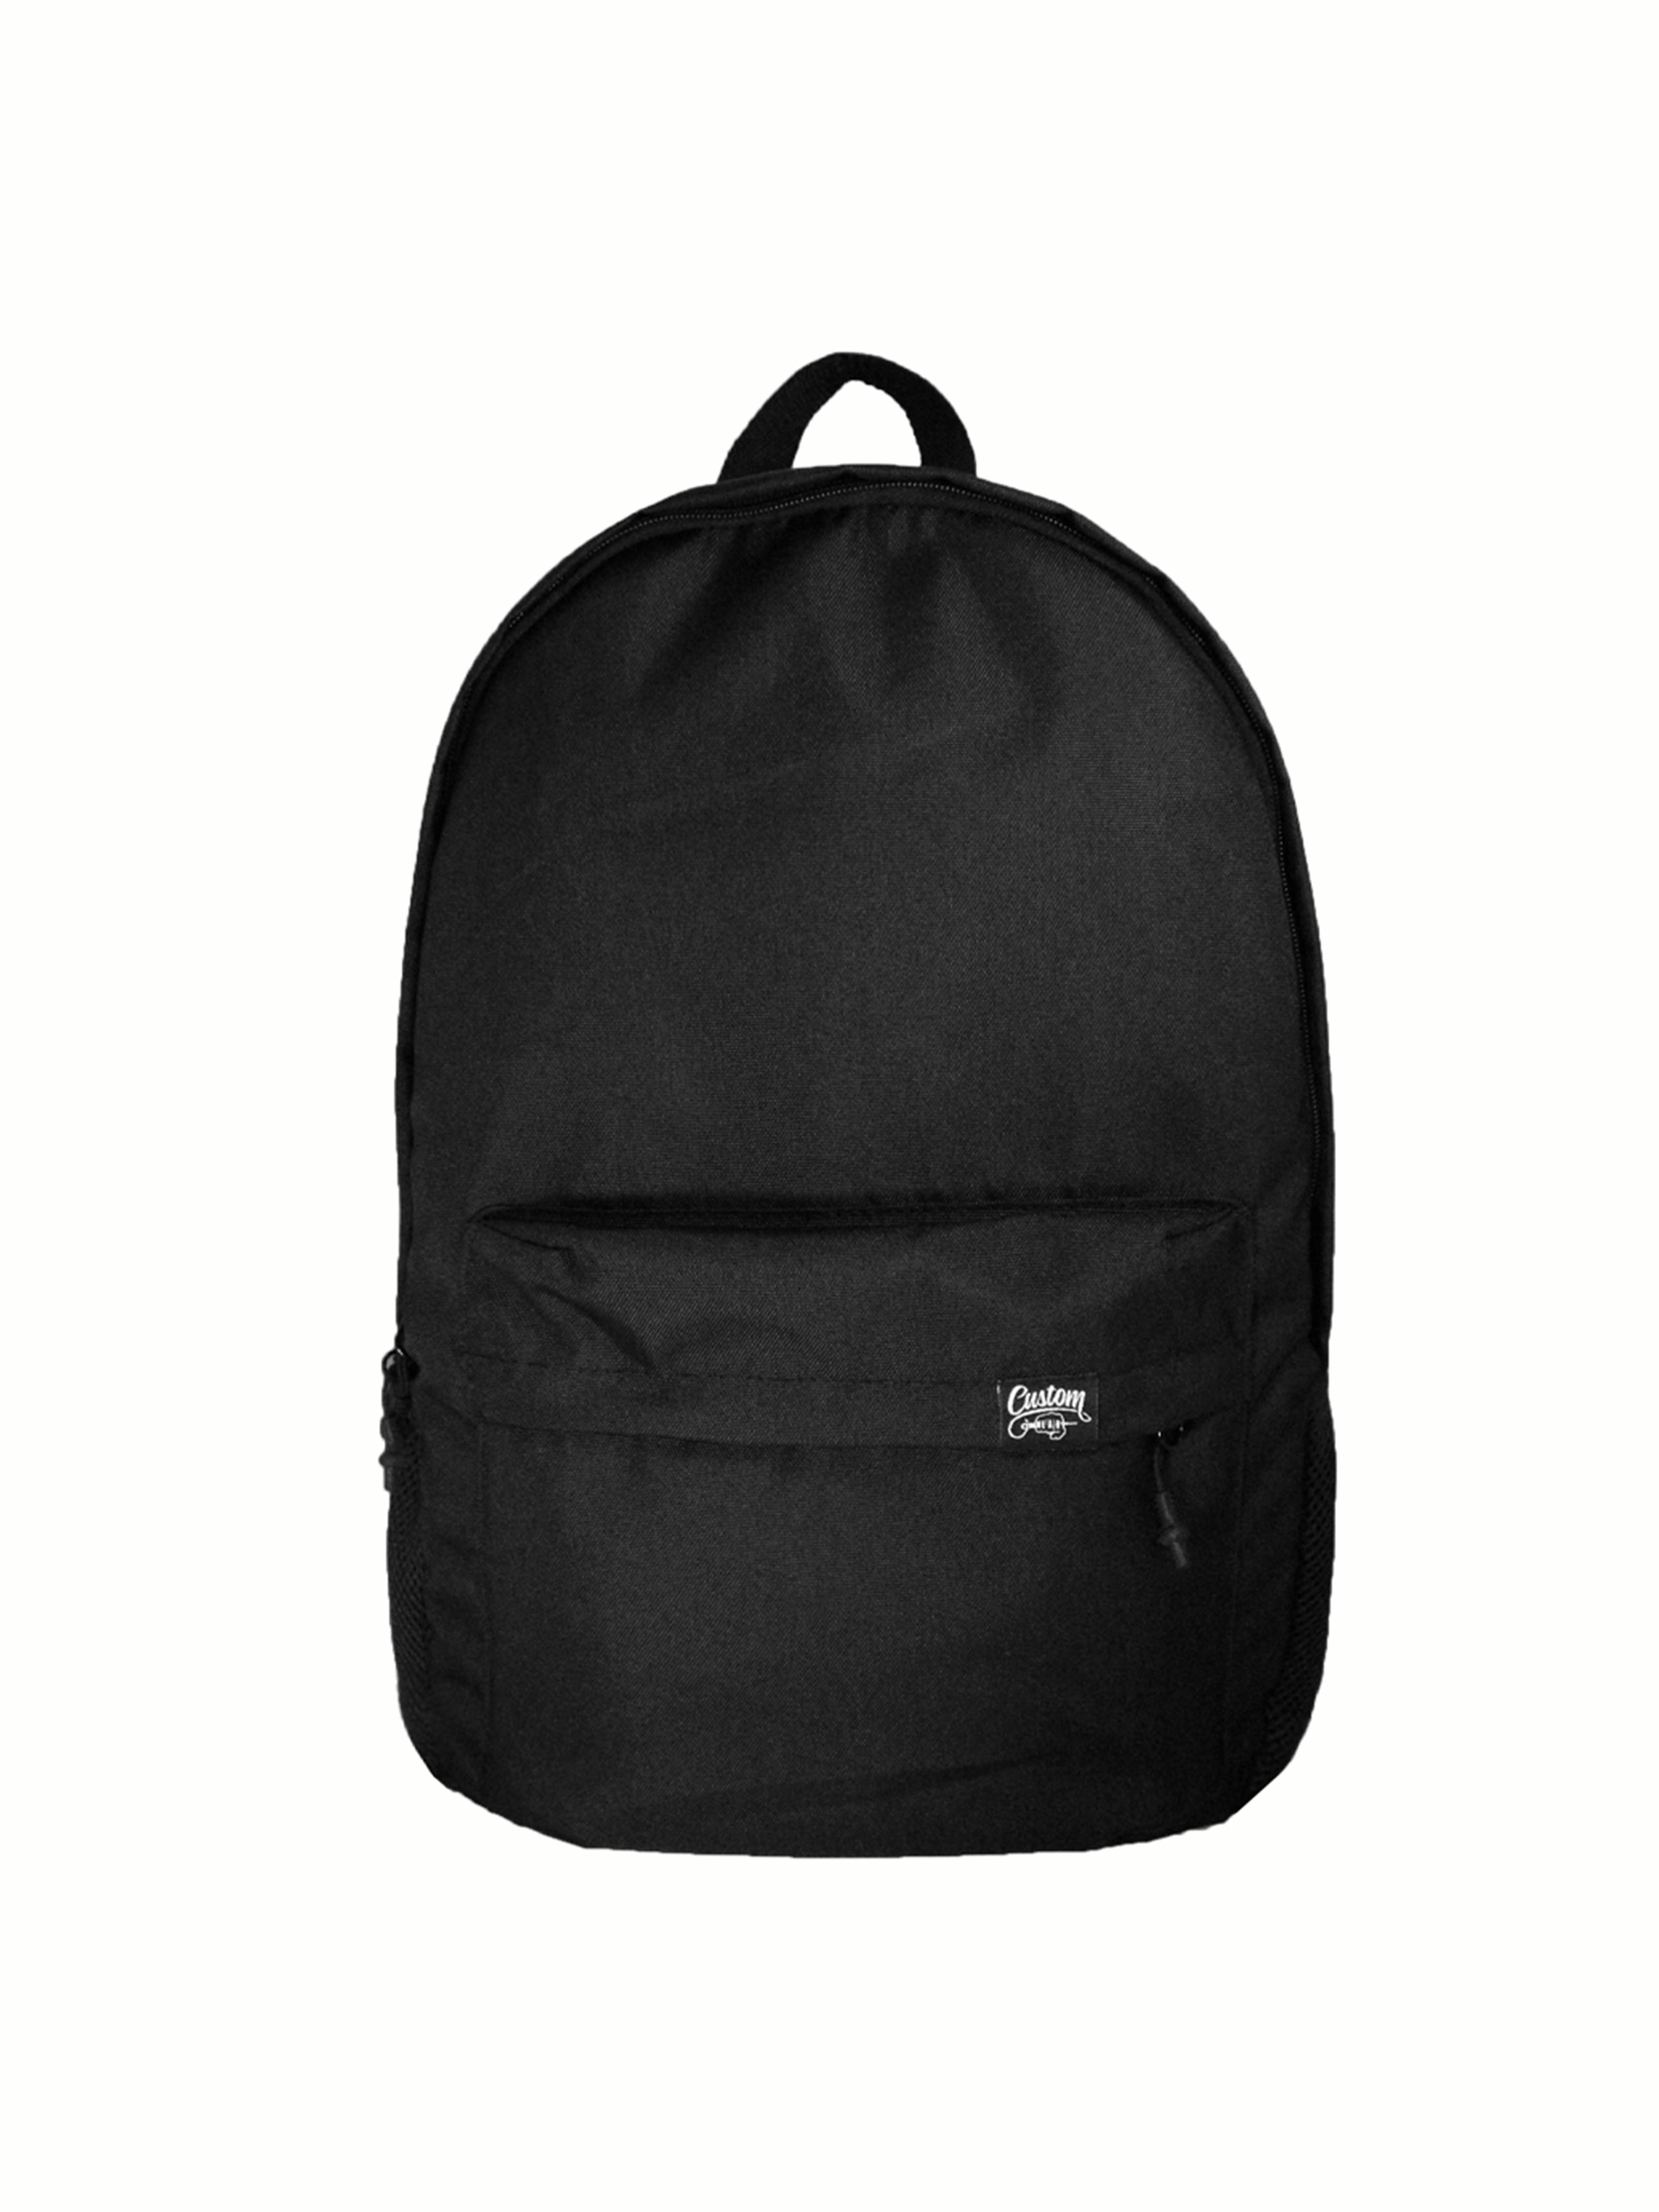 Рюкзак Custom Wear Duo 2.0 чорний